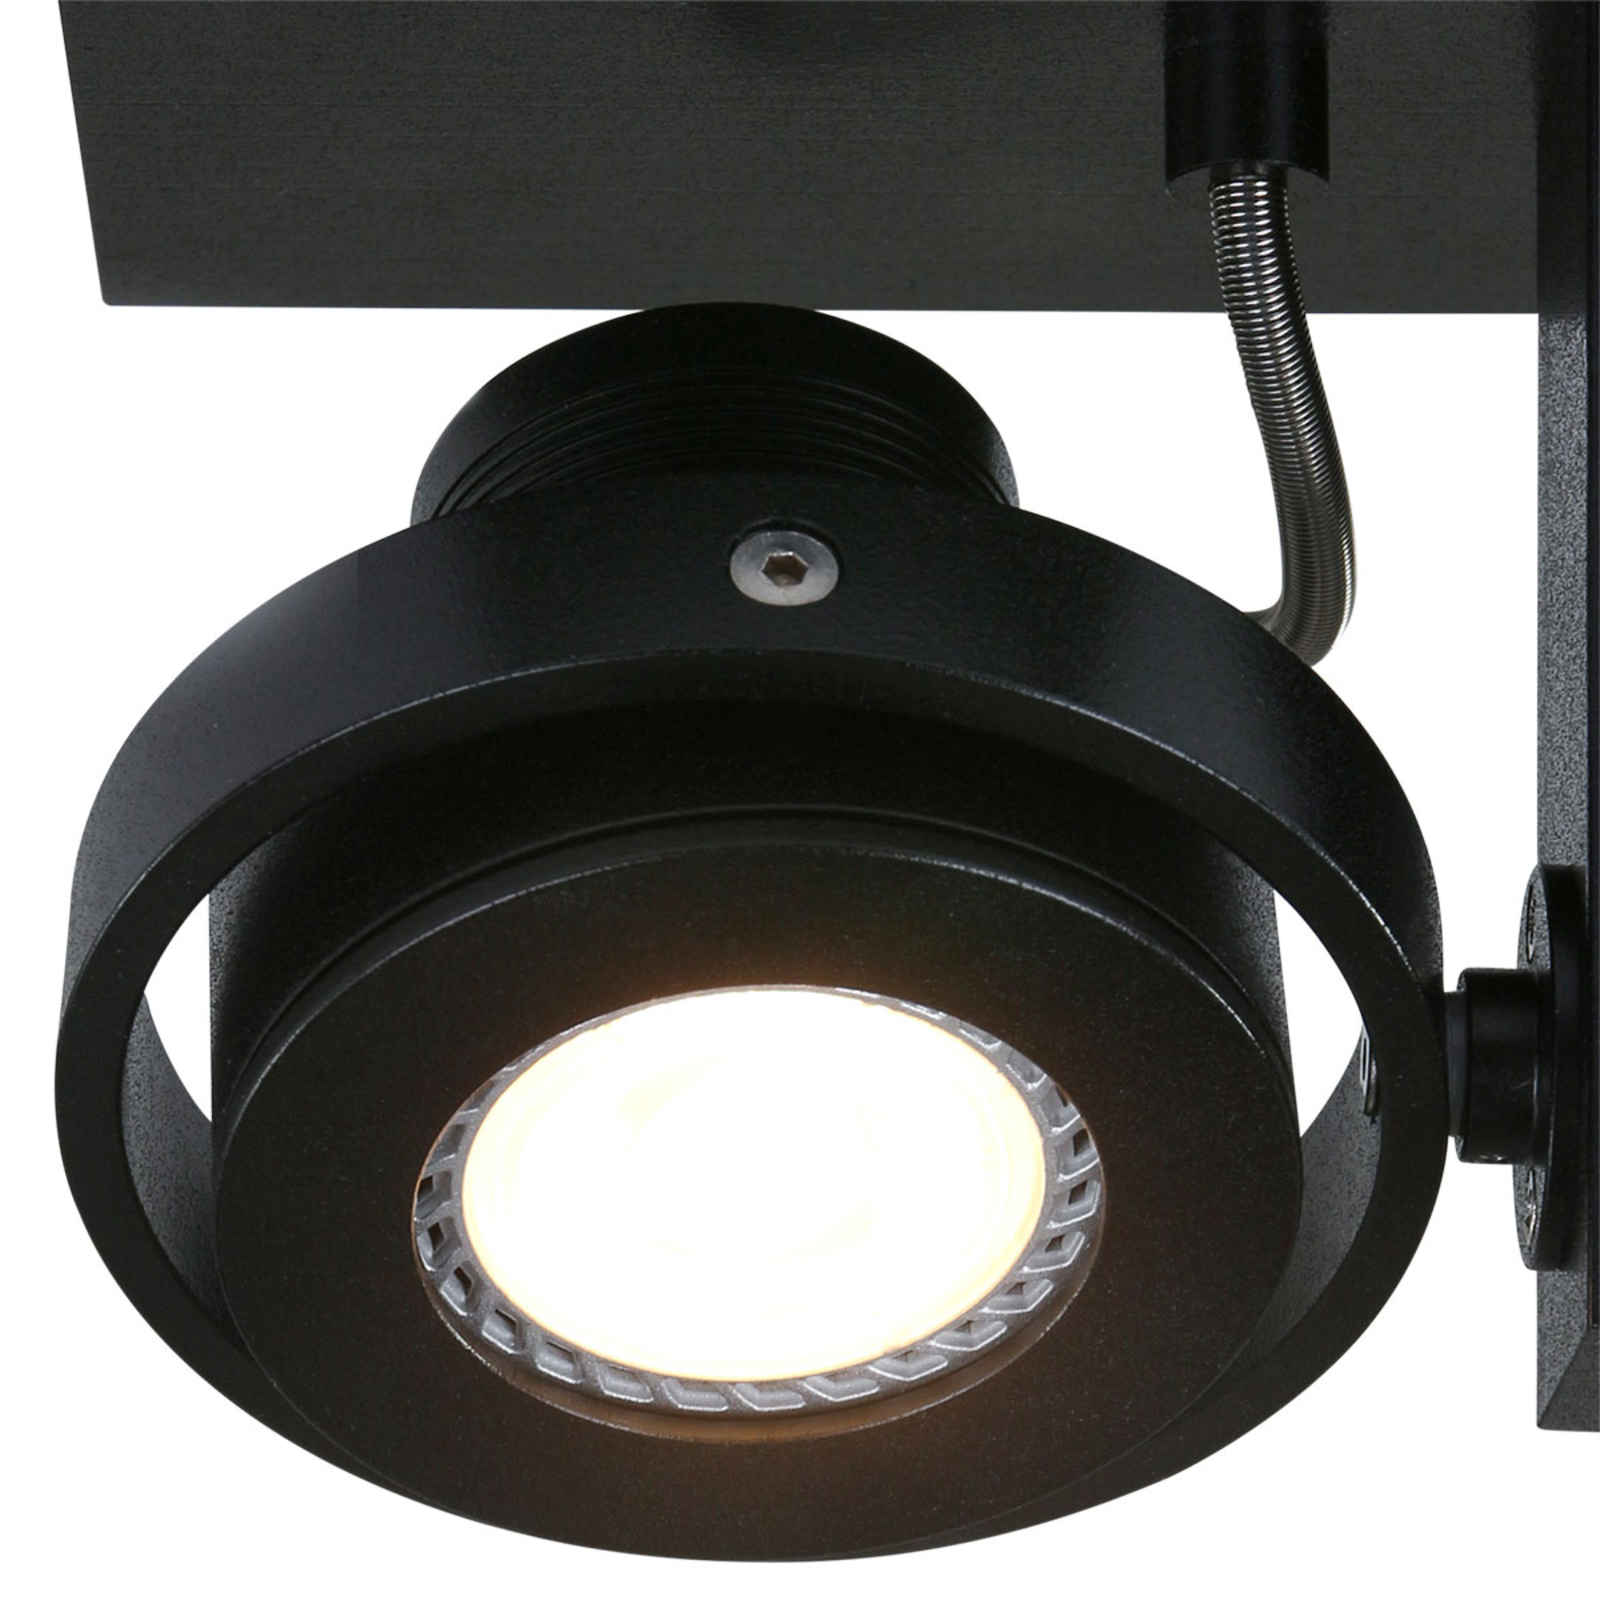 LED-Strahler Westpoint 1fl. schwarz